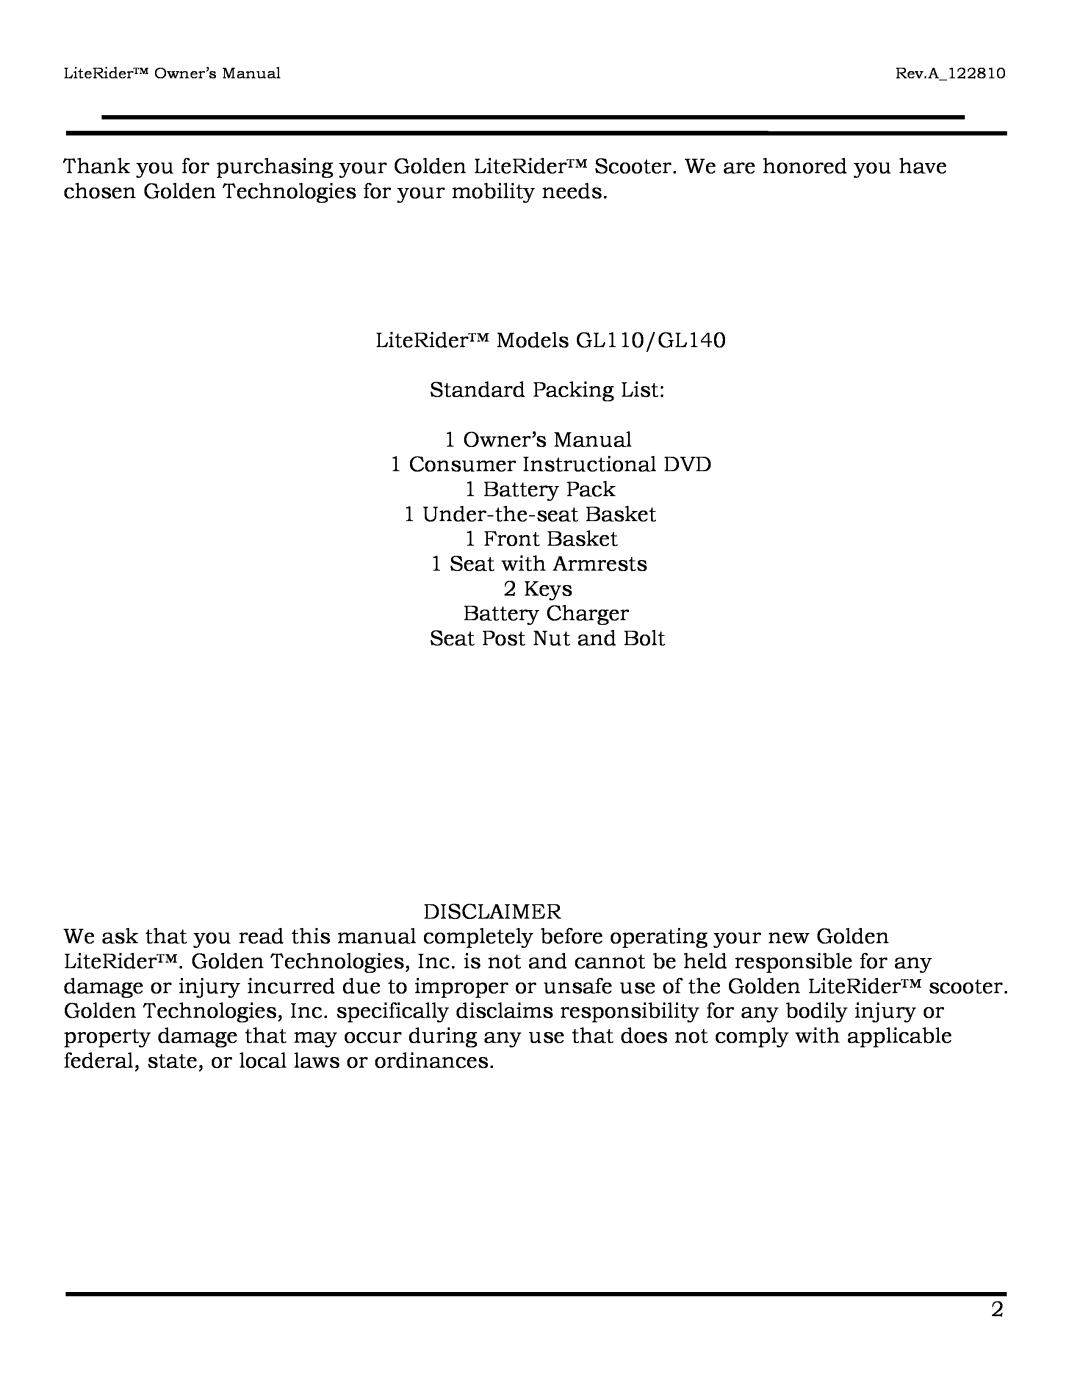 Golden Technologies owner manual LiteRider Models GL110/GL140 Standard Packing List 1 Owner’s Manual 